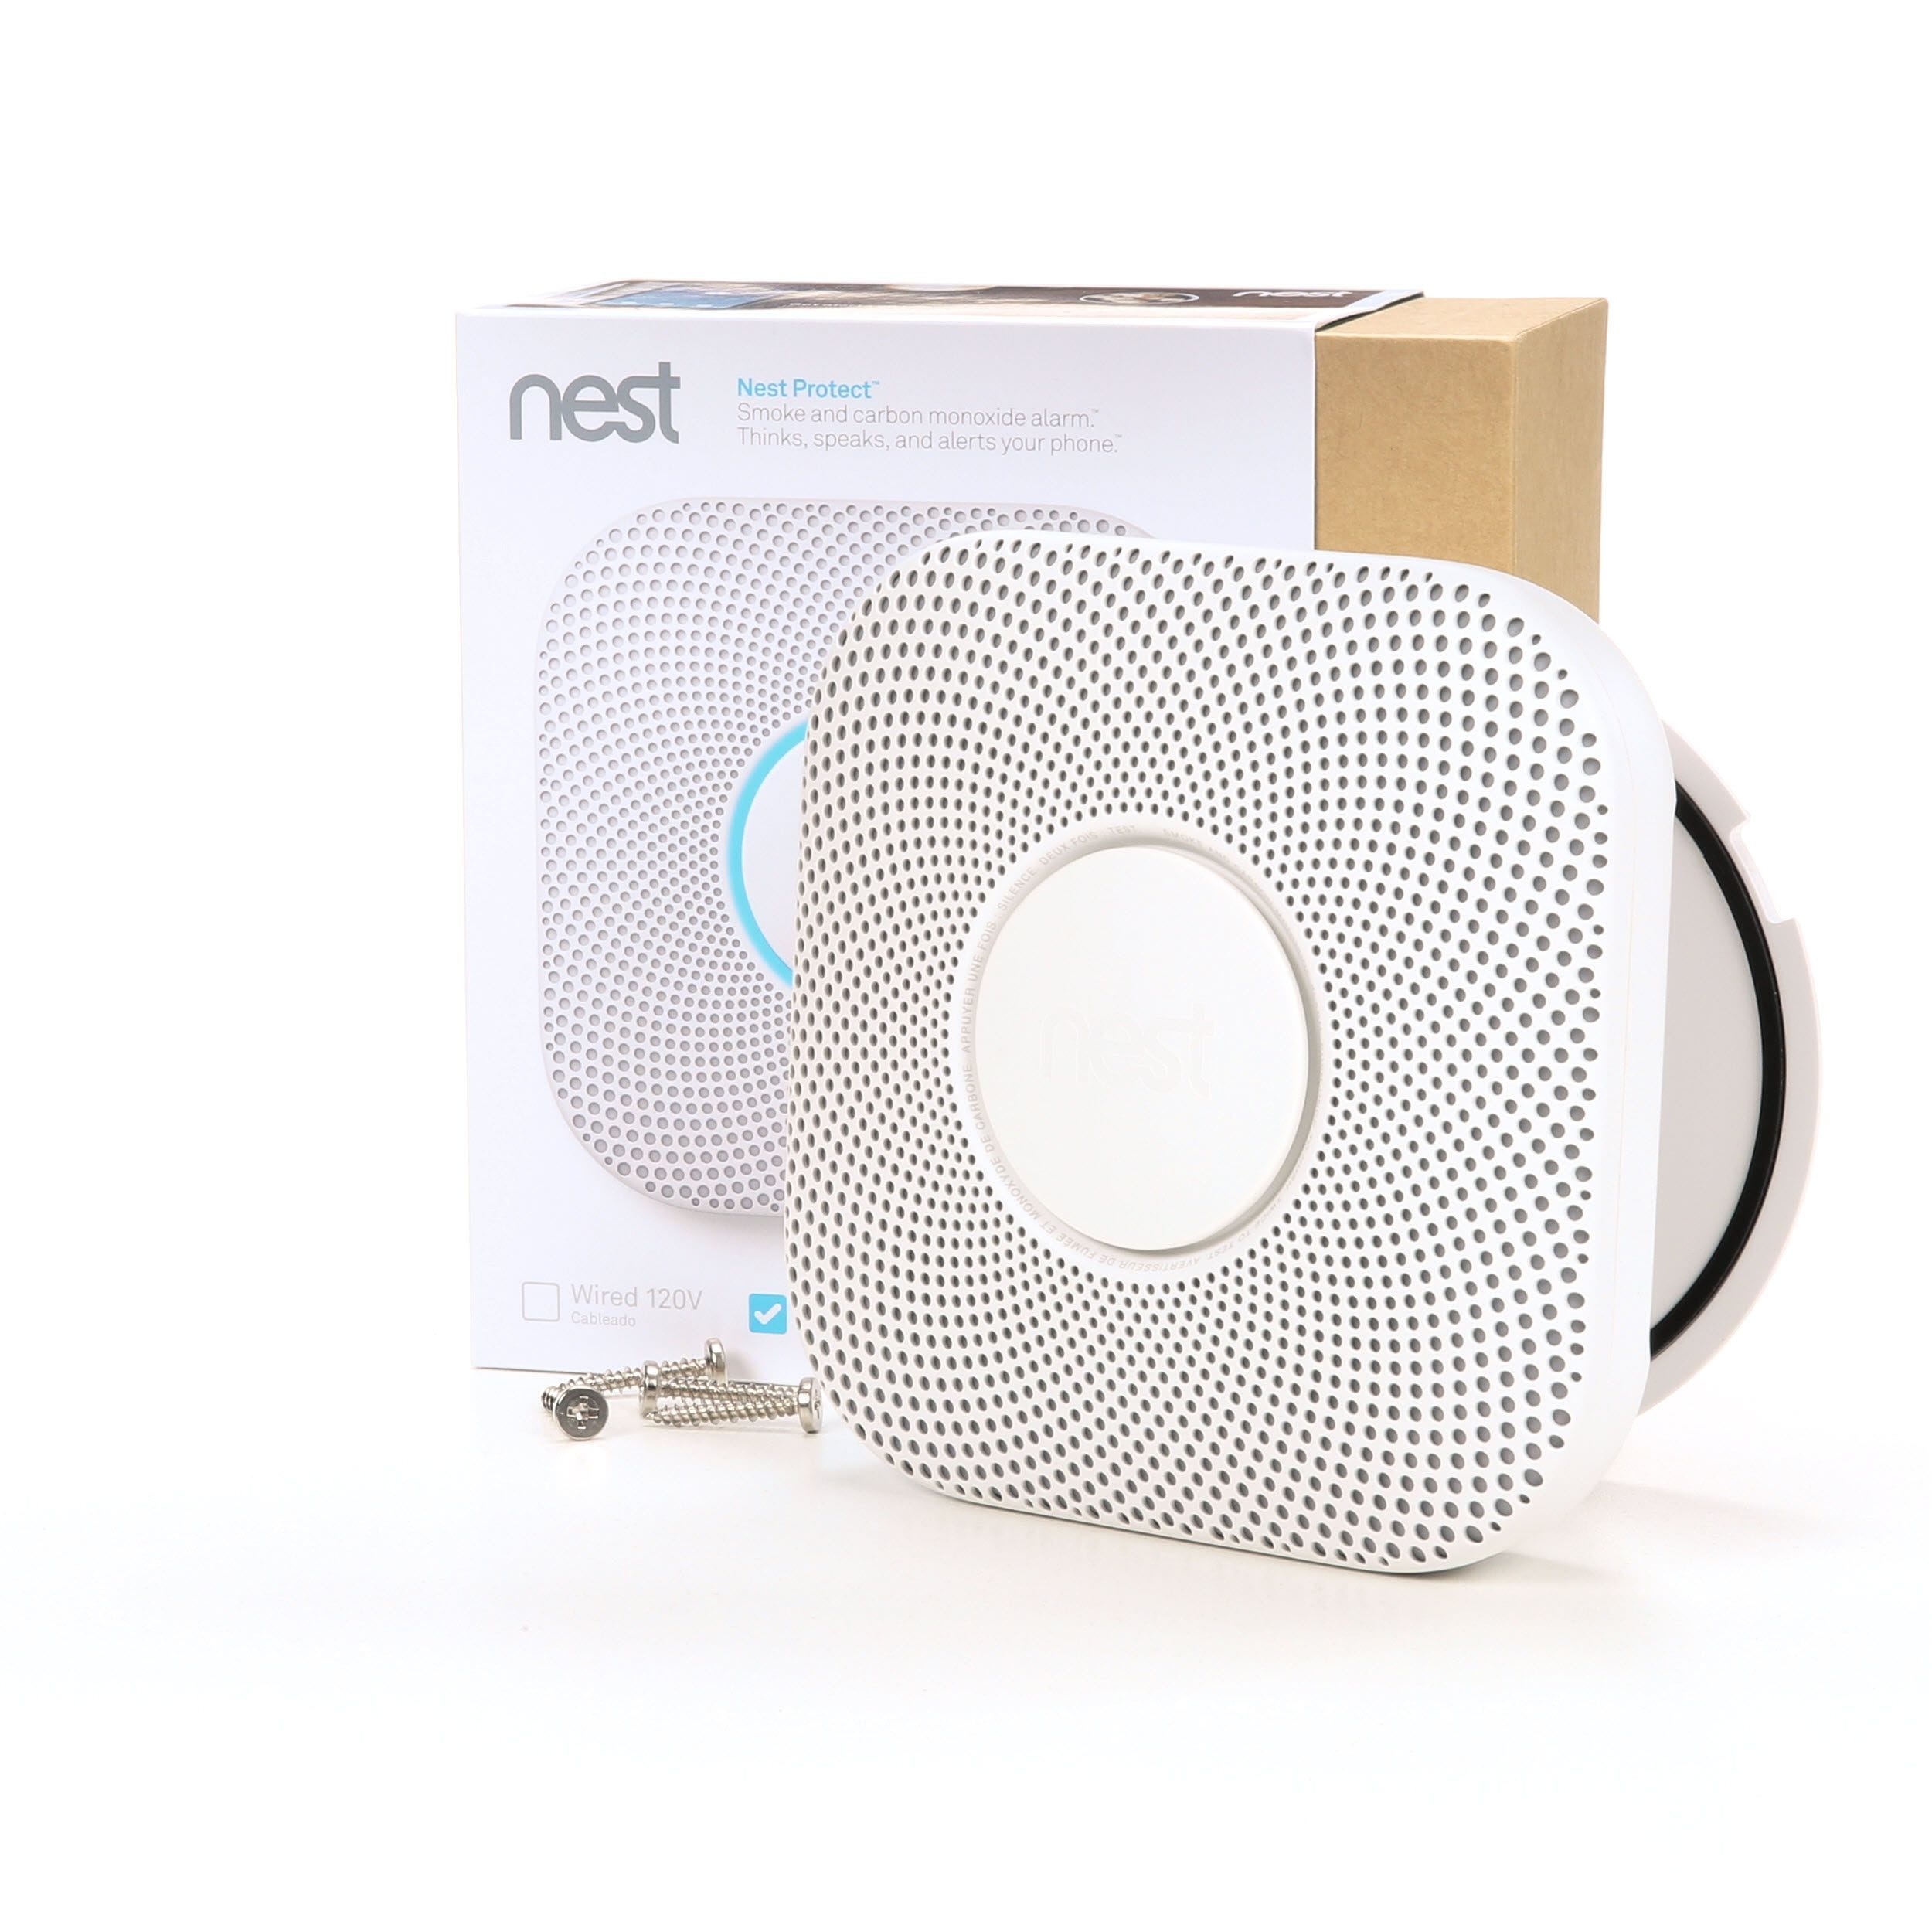 Details about   Google Nest Protect 2nd Gen Smoke/Carbon Monoxide Alarm Battery 2 Pack Smart 